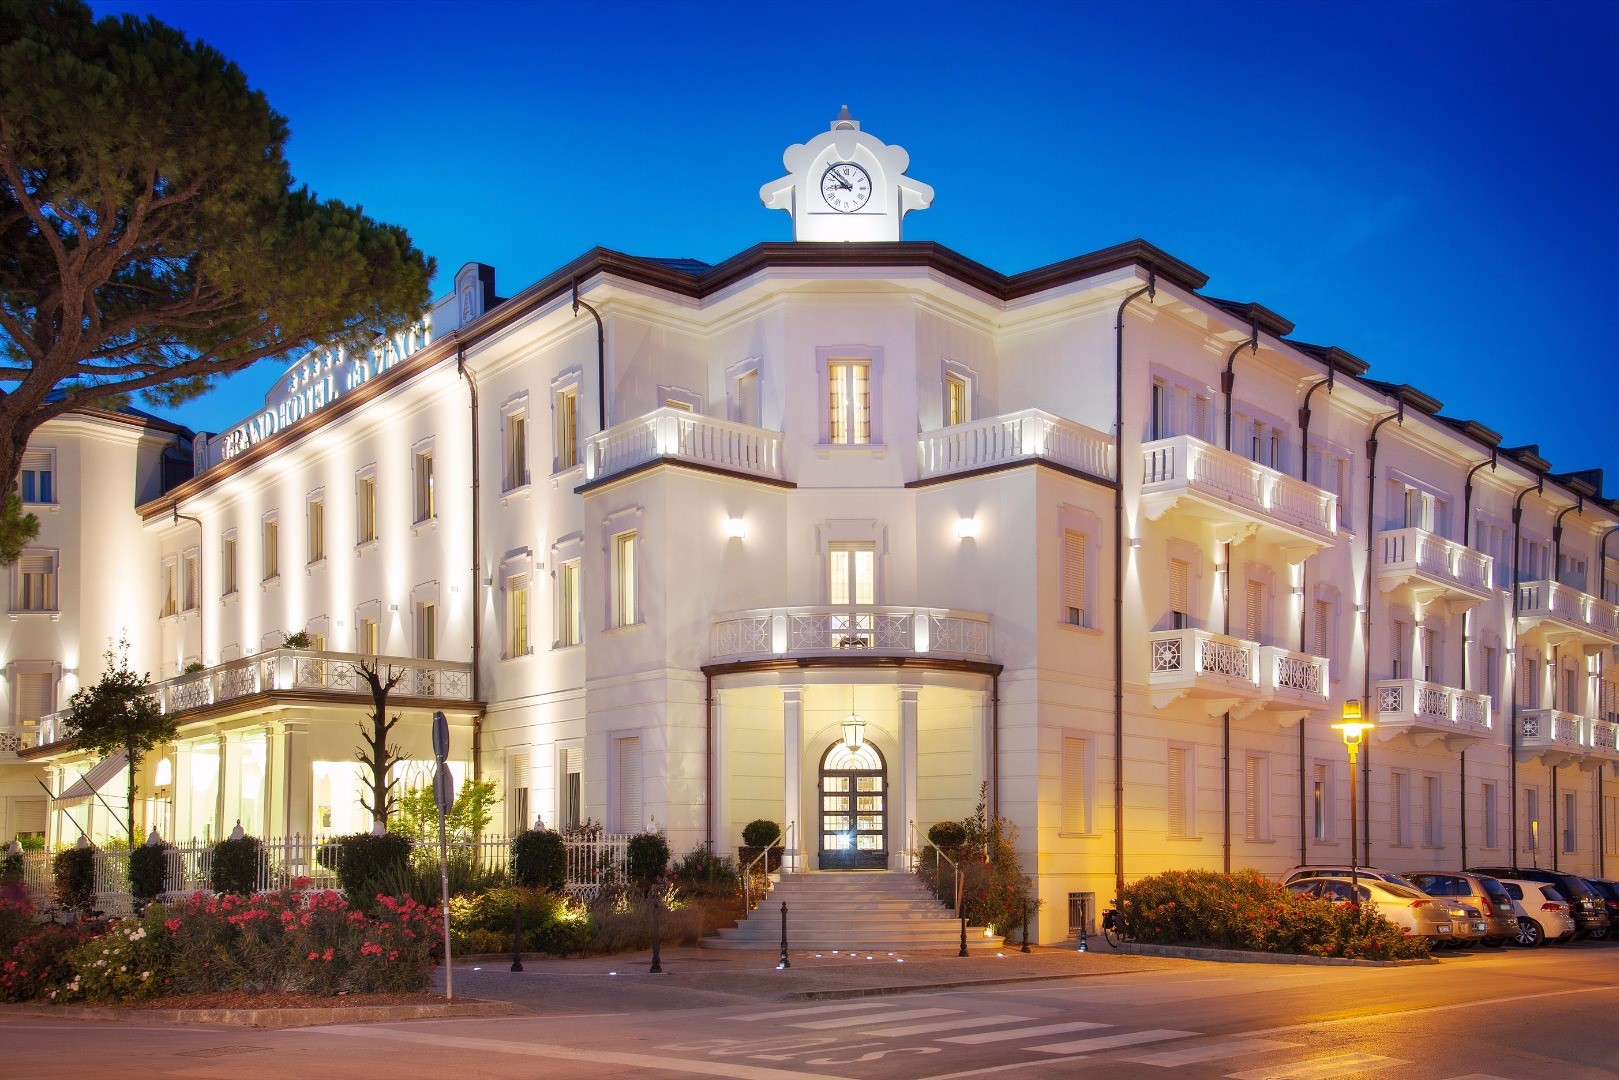 Emilia Romagna, Italien, Grand Hotel Da Vinci